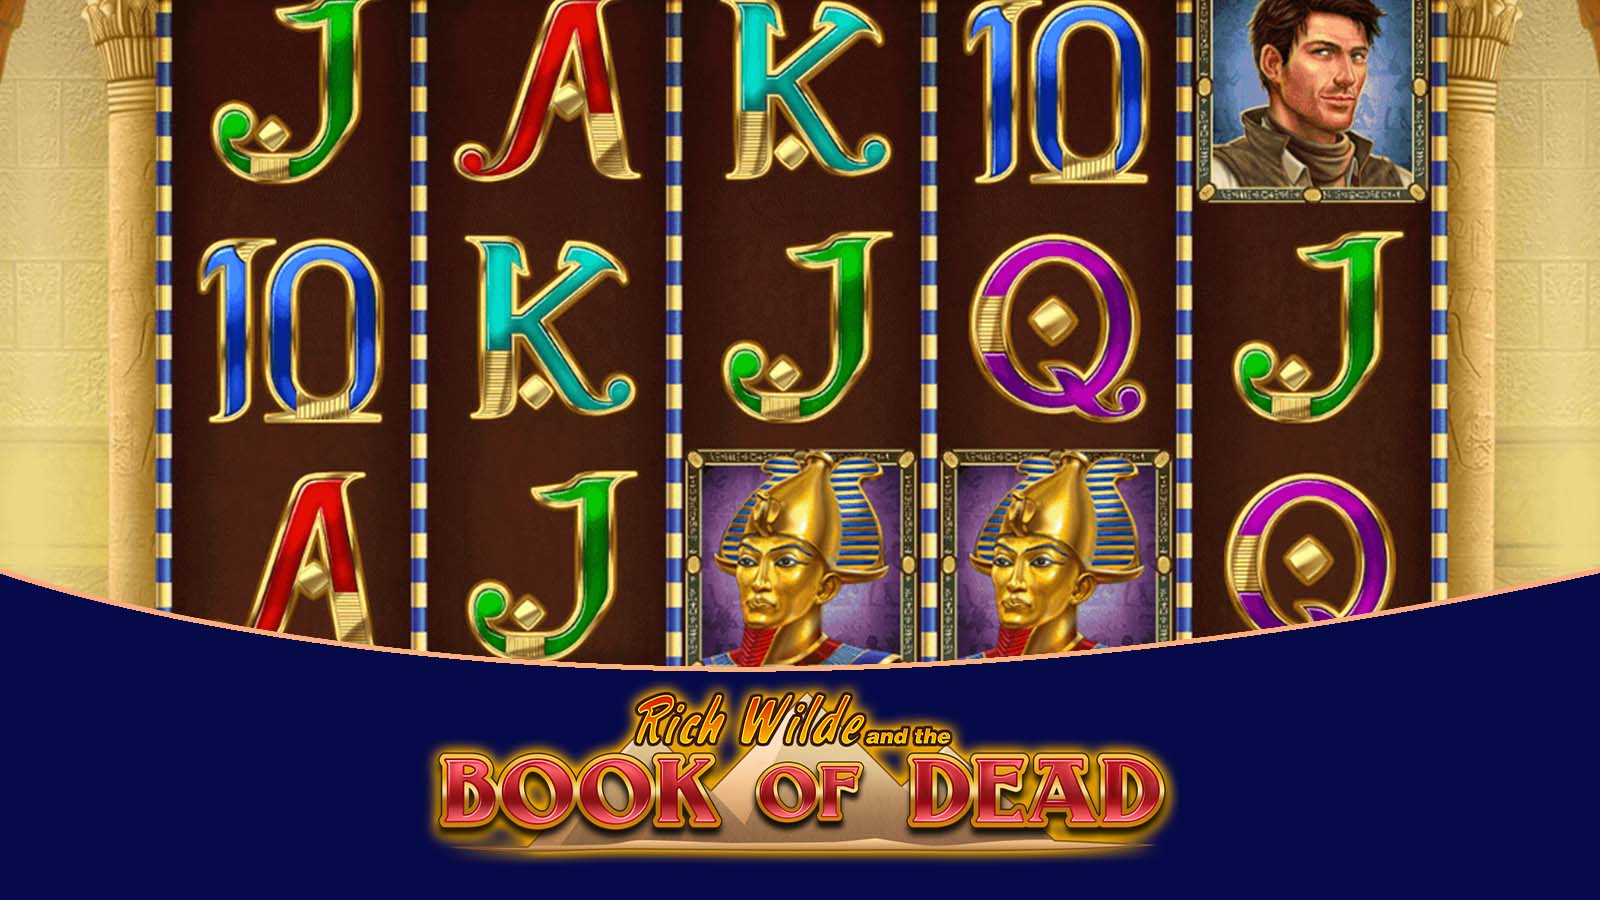 Best Slots For Free Spins No Deposit Bonuses: Book of Dead